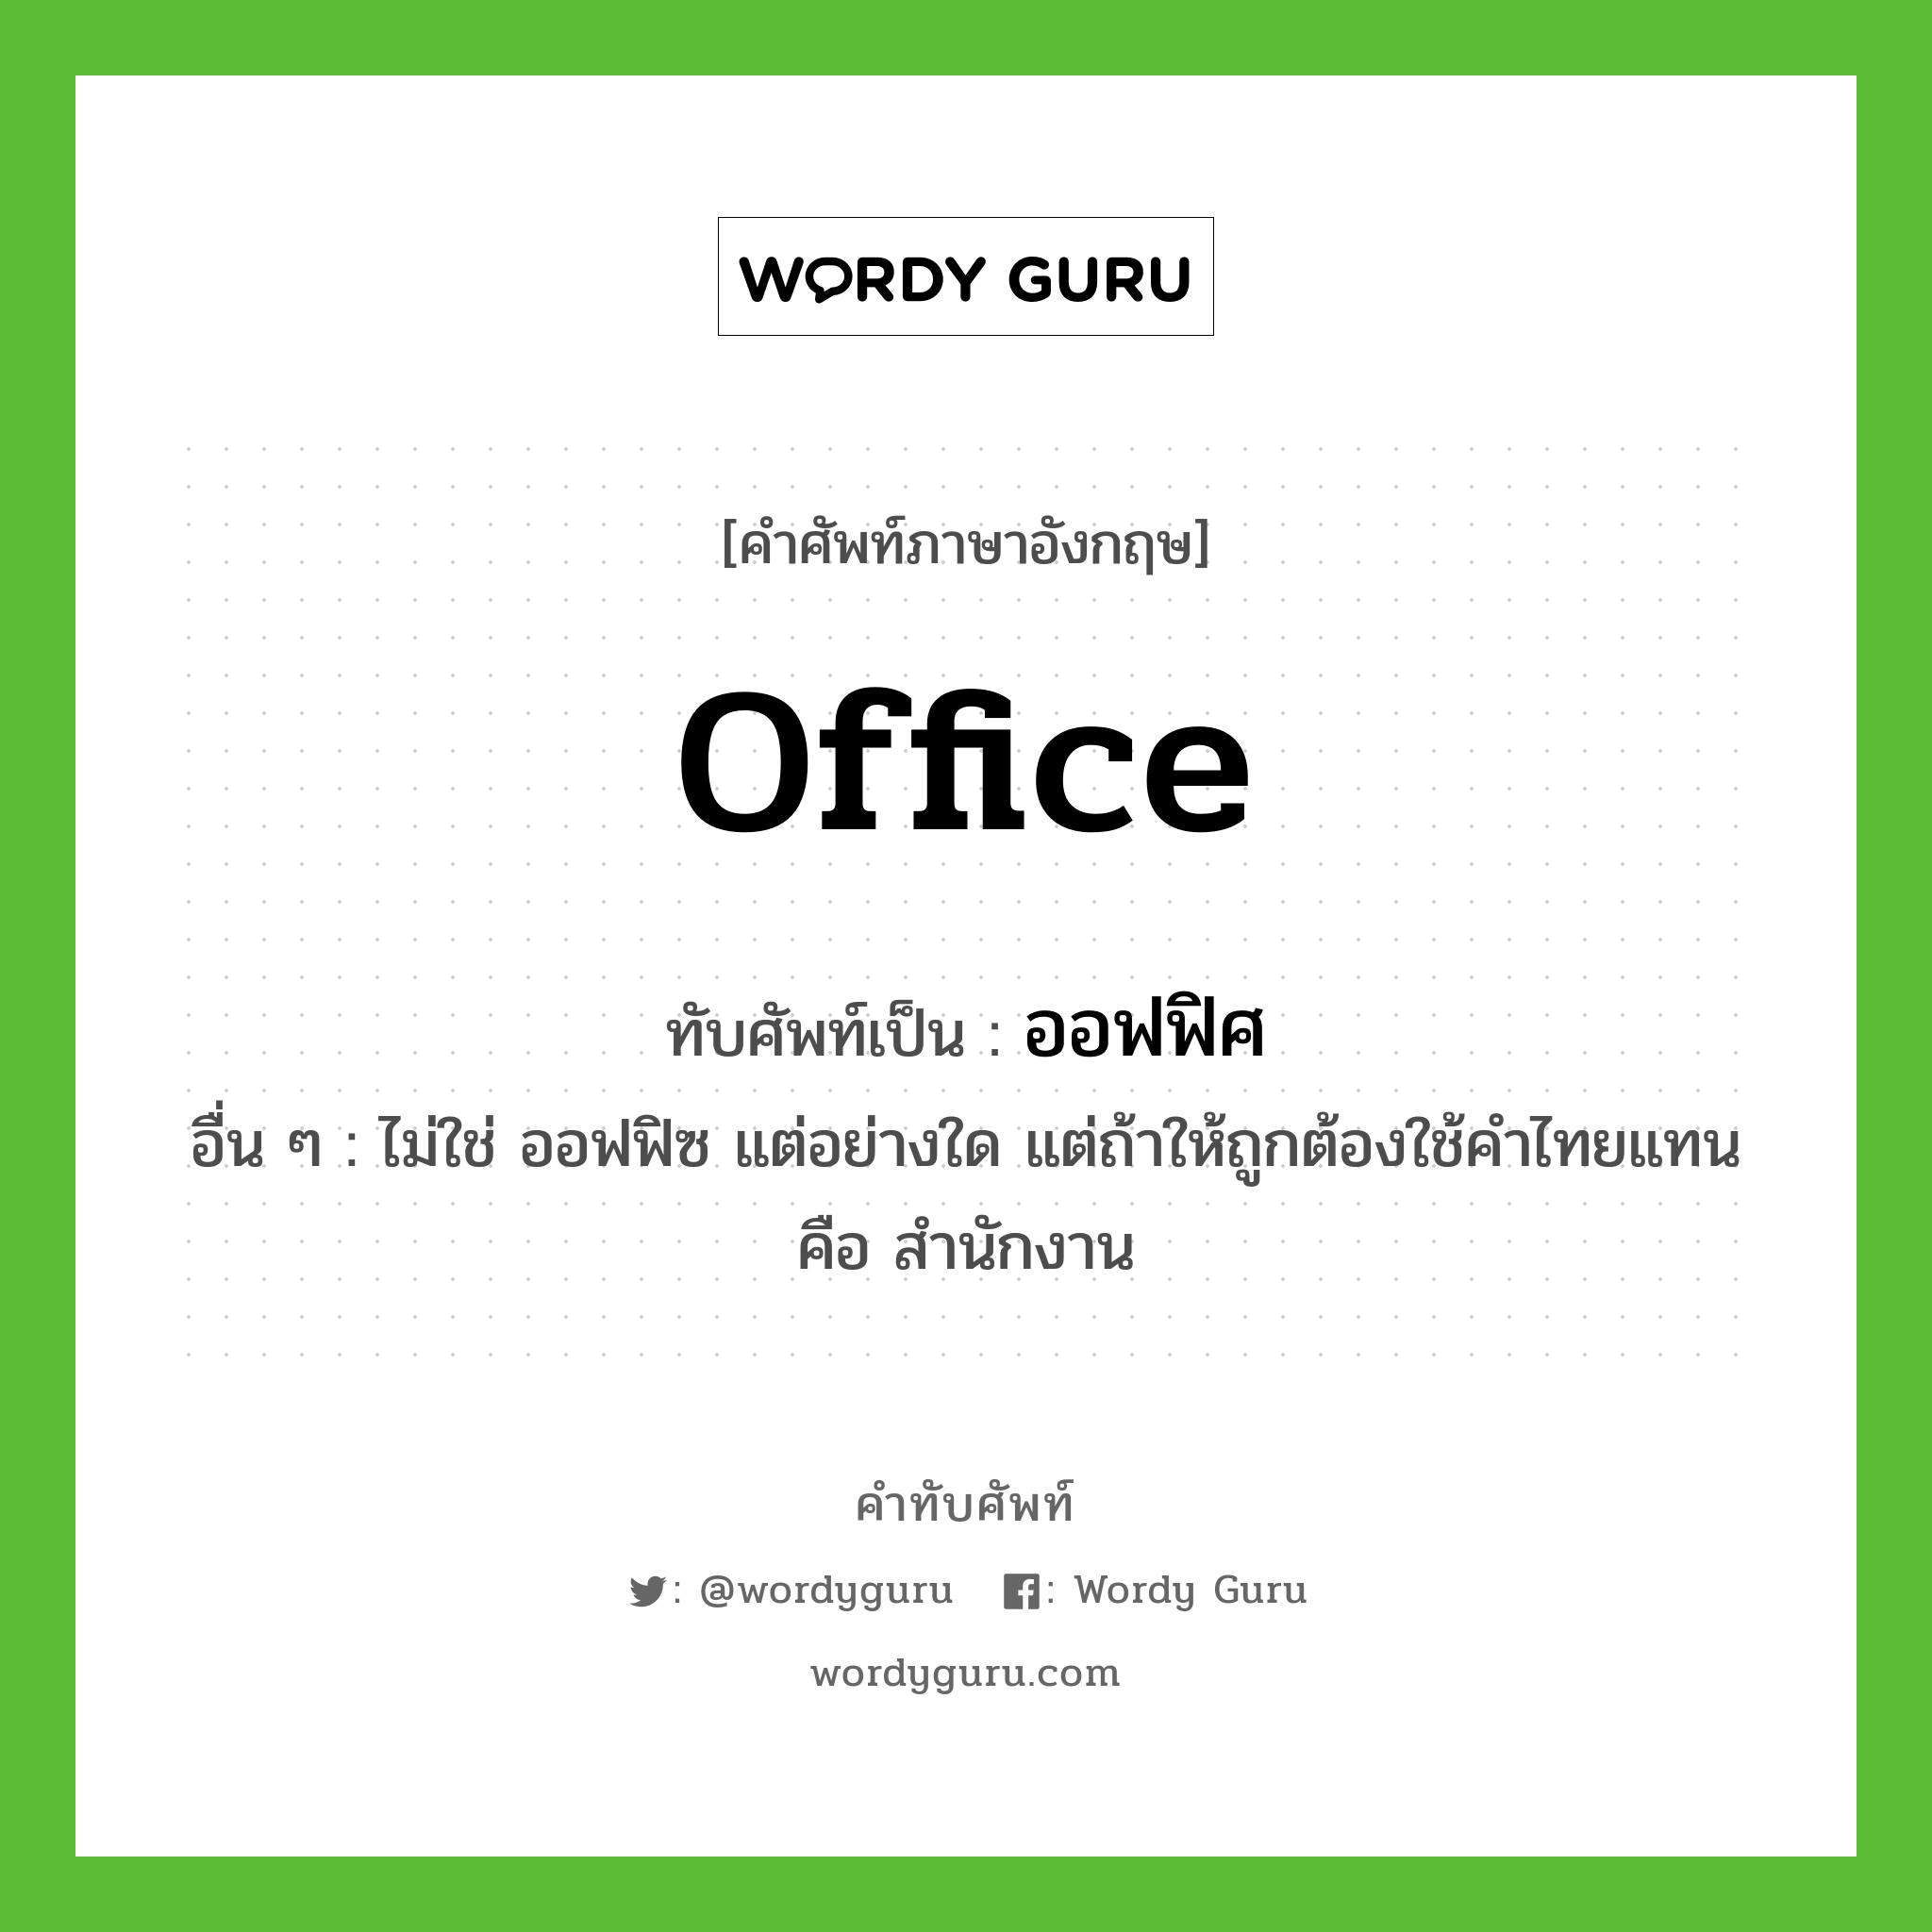 office เขียนเป็นคำไทยว่าอะไร?, คำศัพท์ภาษาอังกฤษ office ทับศัพท์เป็น ออฟฟิศ อื่น ๆ ไม่ใช่ ออฟฟิซ แต่อย่างใด แต่ถ้าให้ถูกต้องใช้คำไทยแทน คือ สำนักงาน